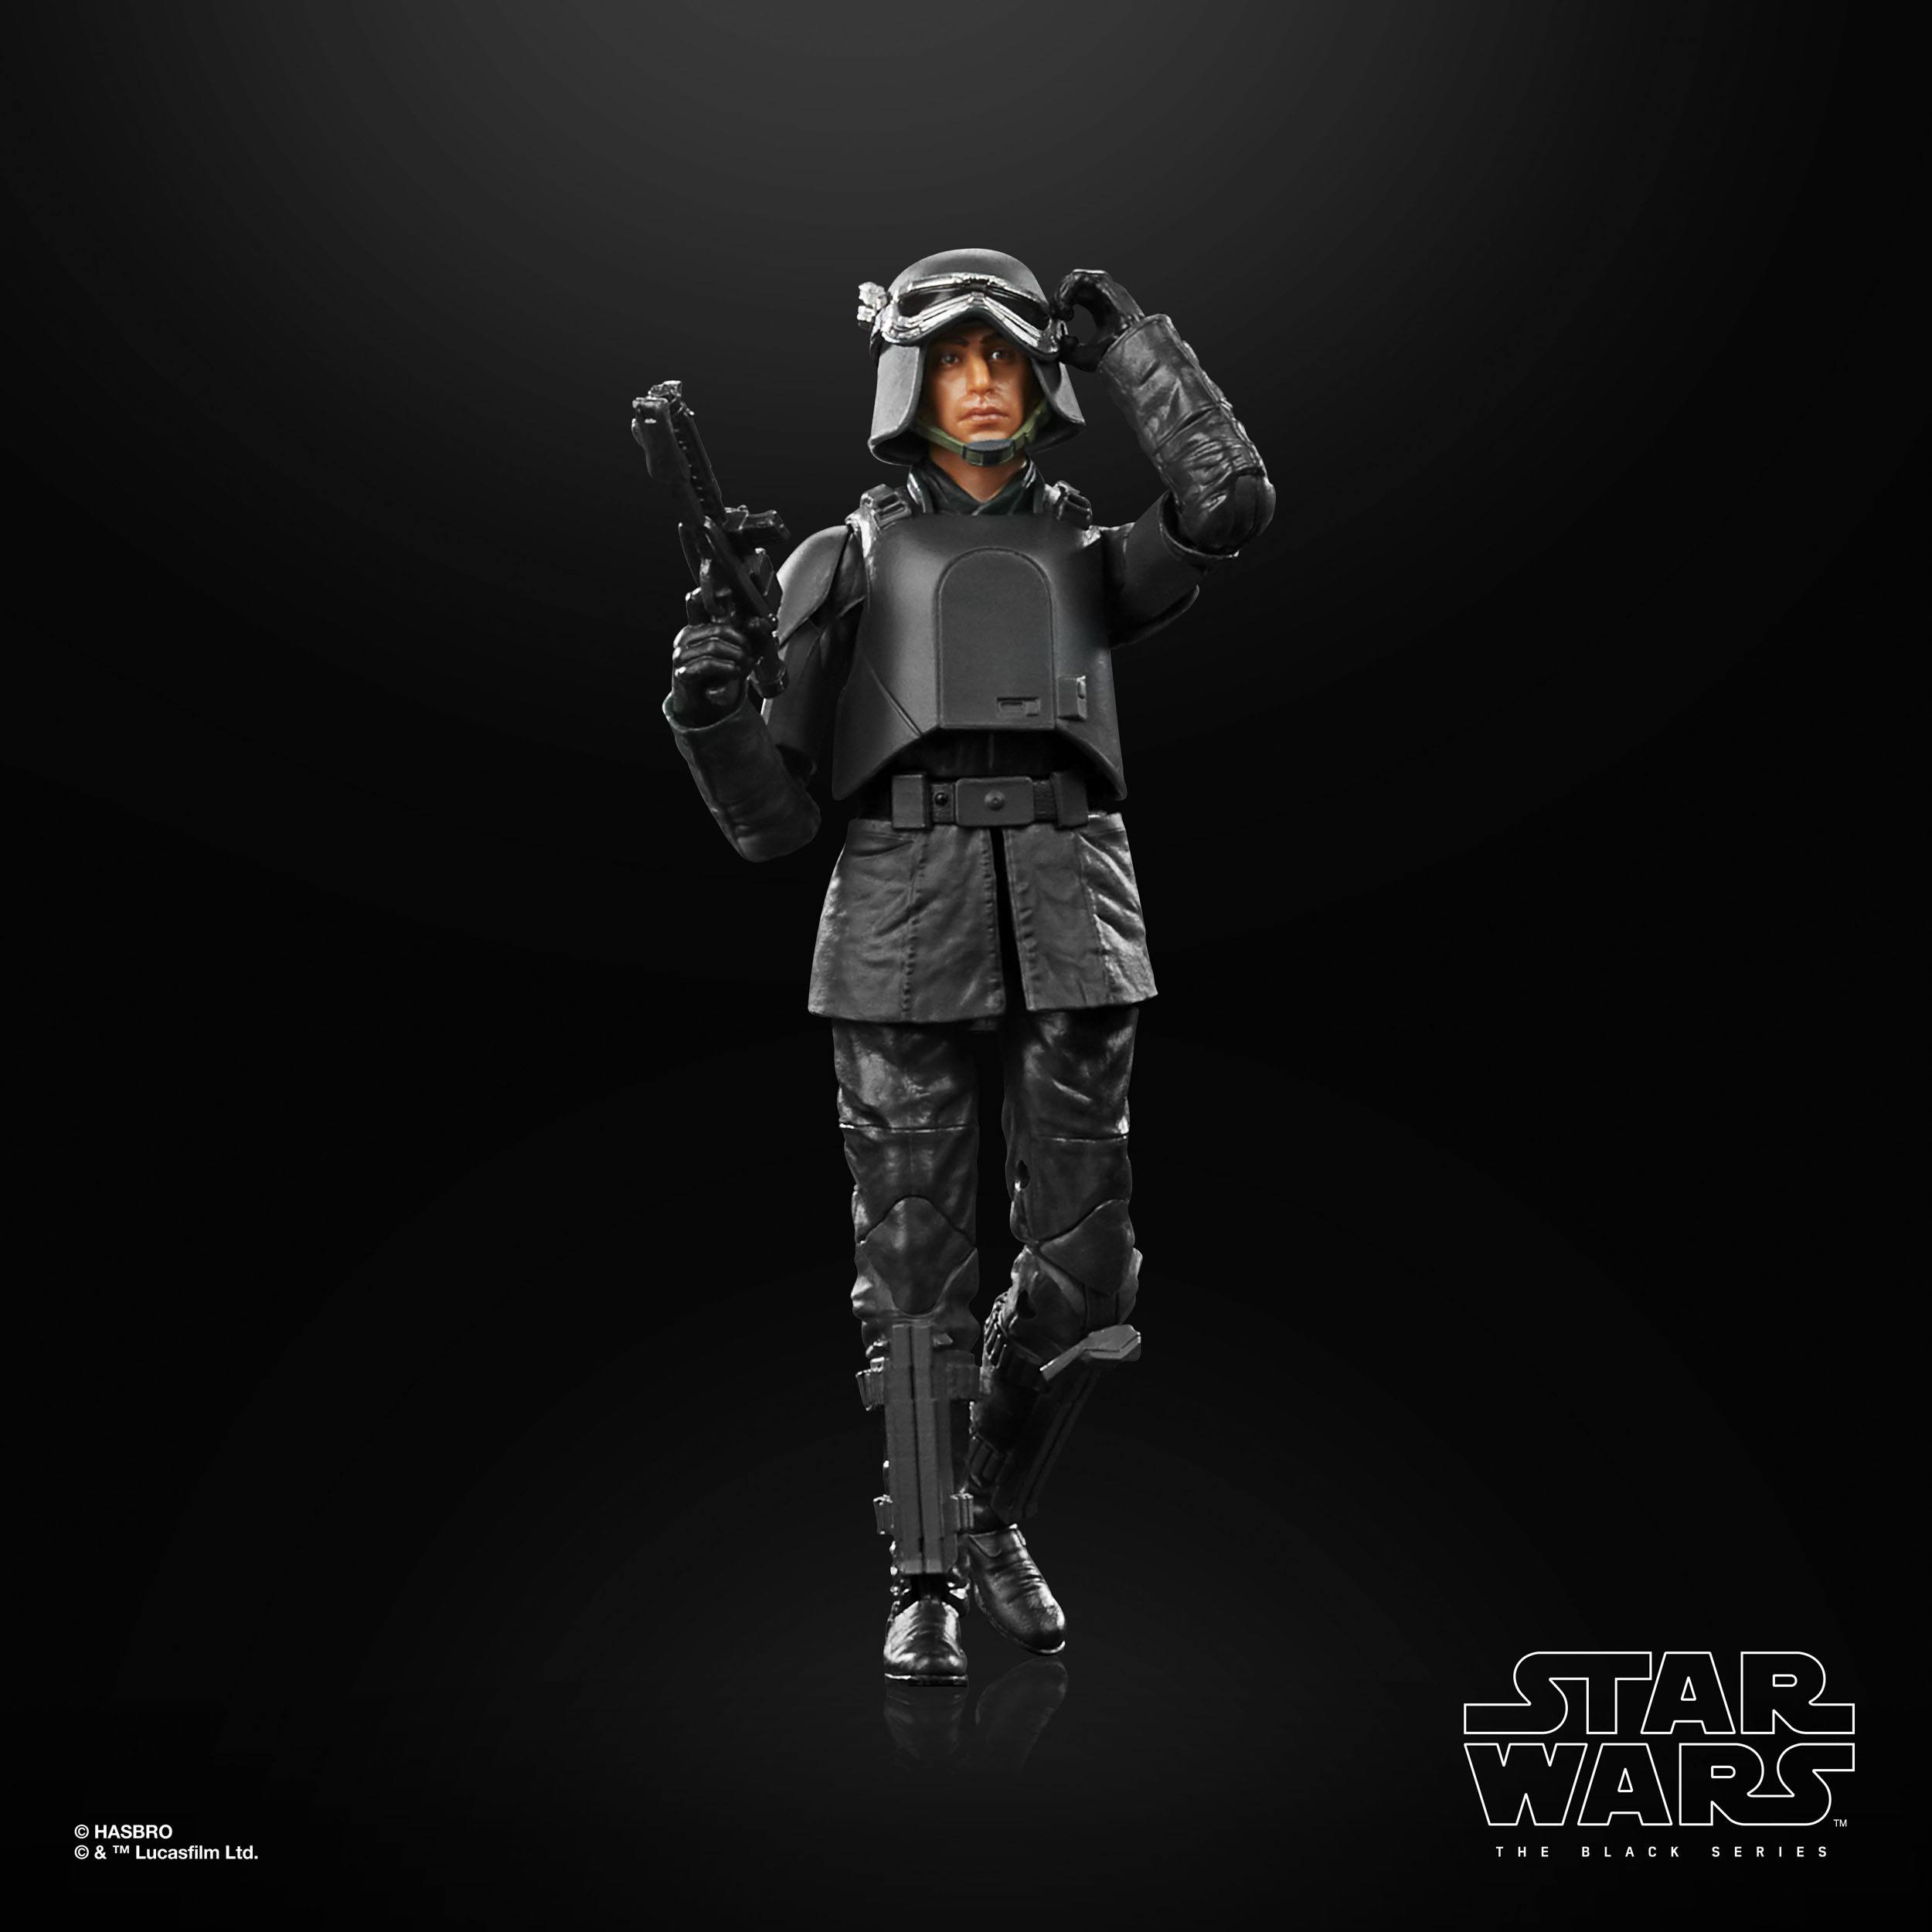 VP leicht beschädigt! Star Wars The Black Series Imperial Officer (Ferrix)  F56015L0 5010994163525